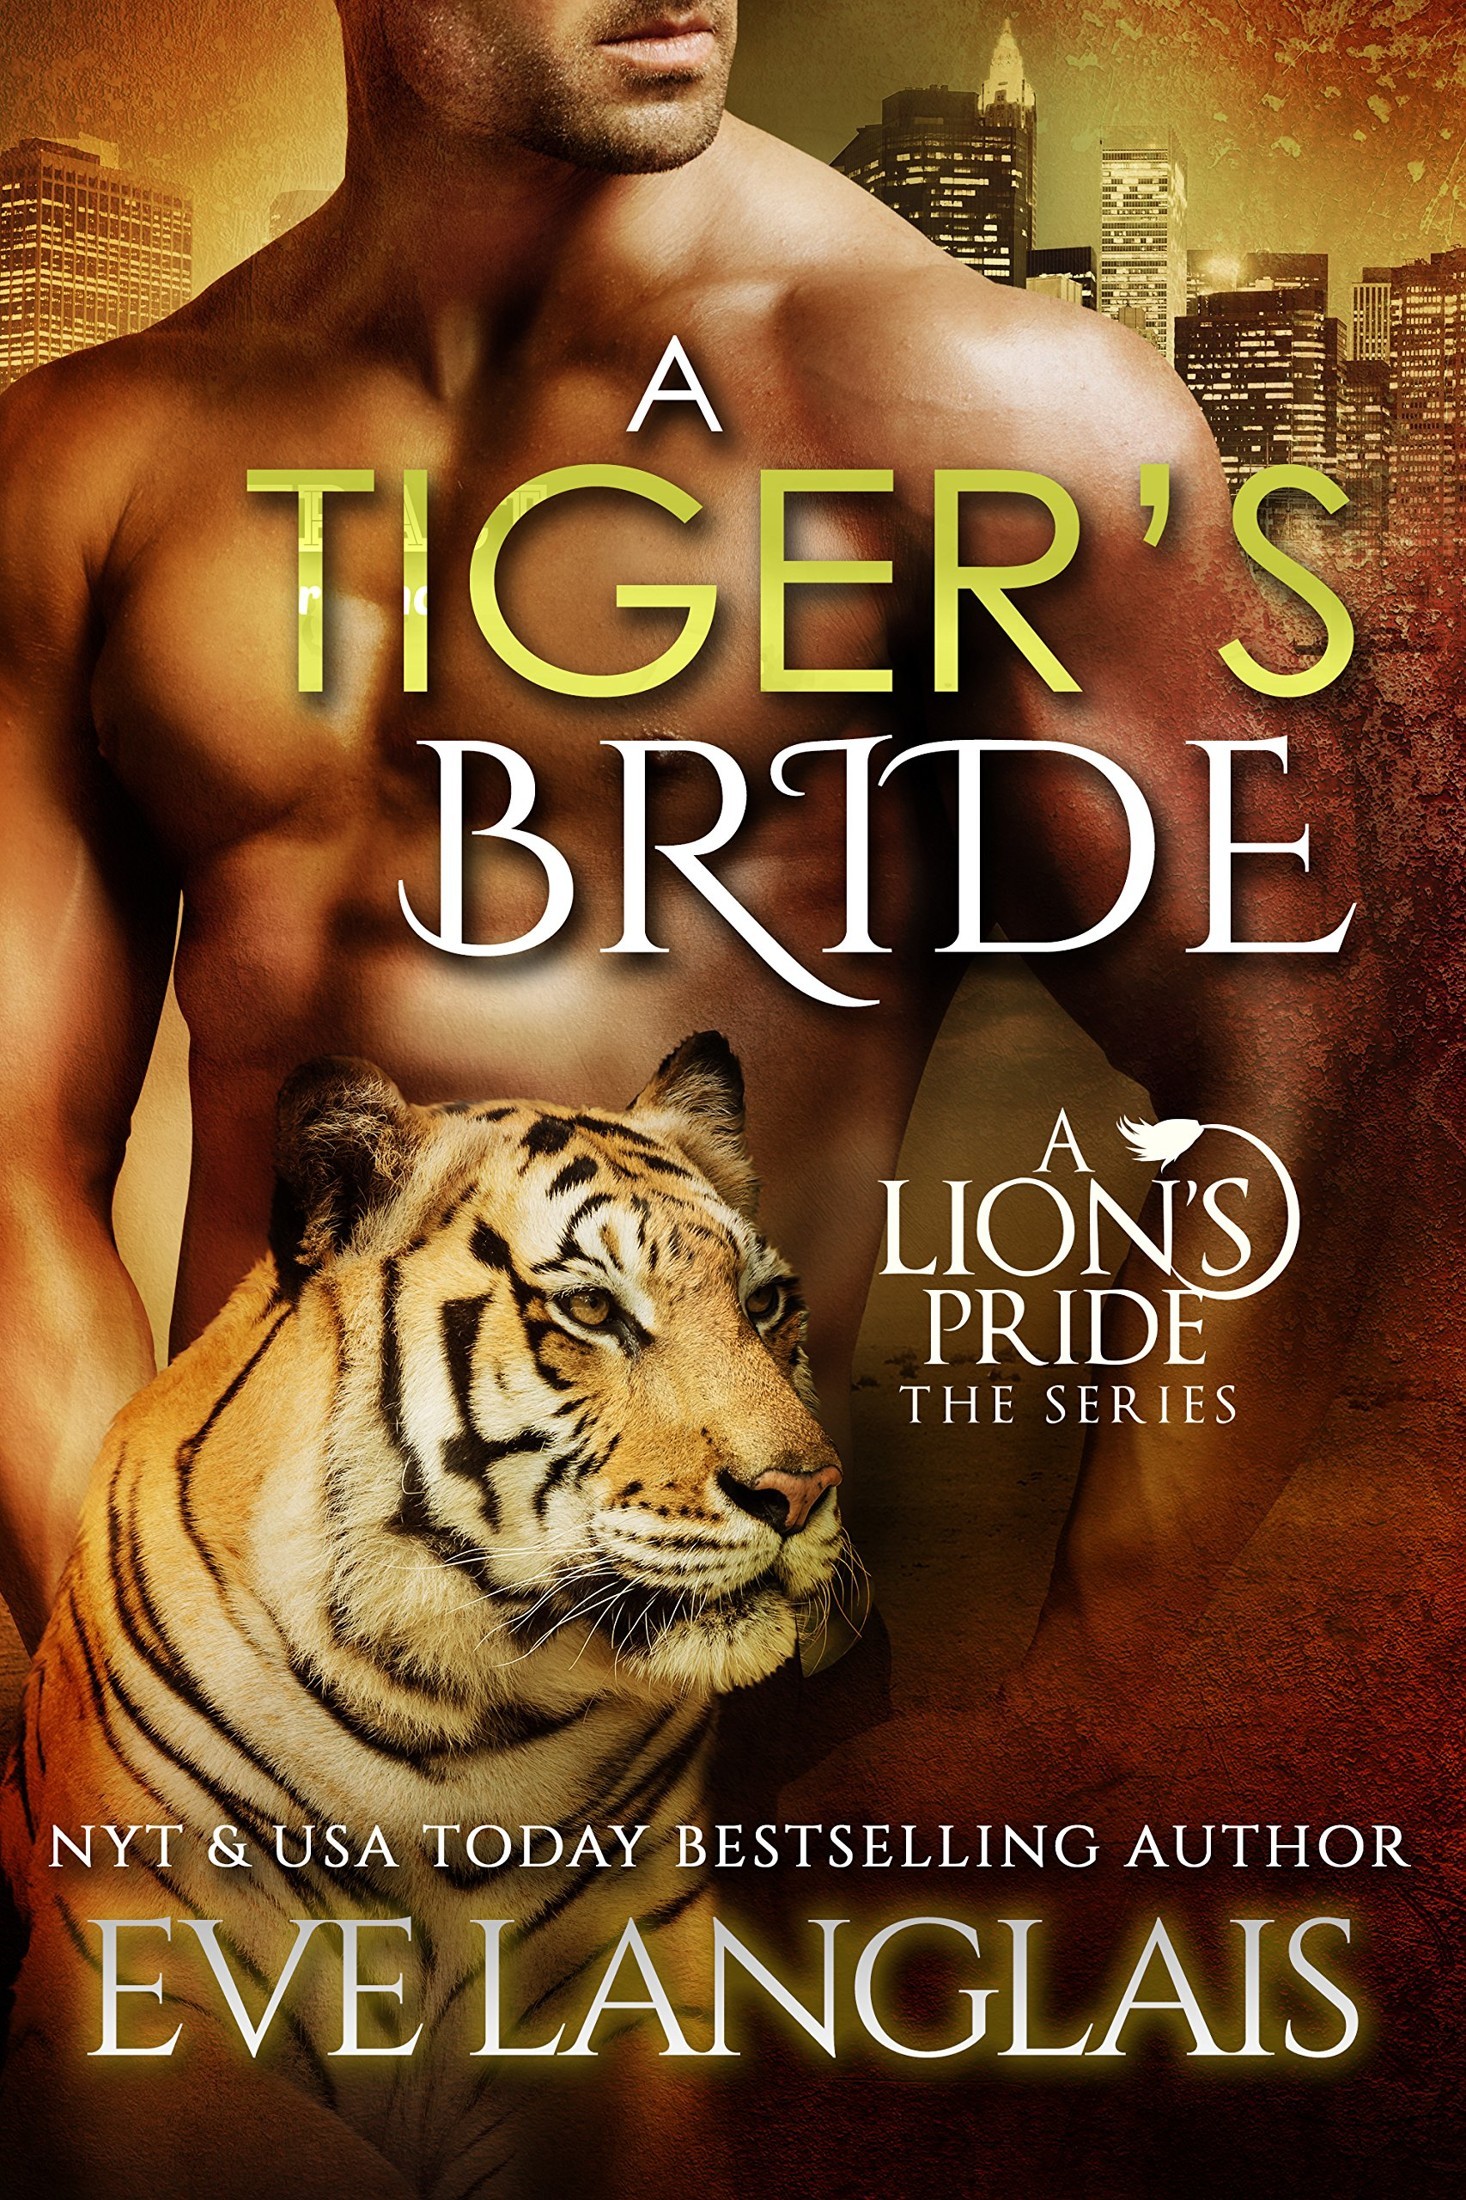 A Tiger's Bride (A Lion's Pride Book 4) by Eve Langlais